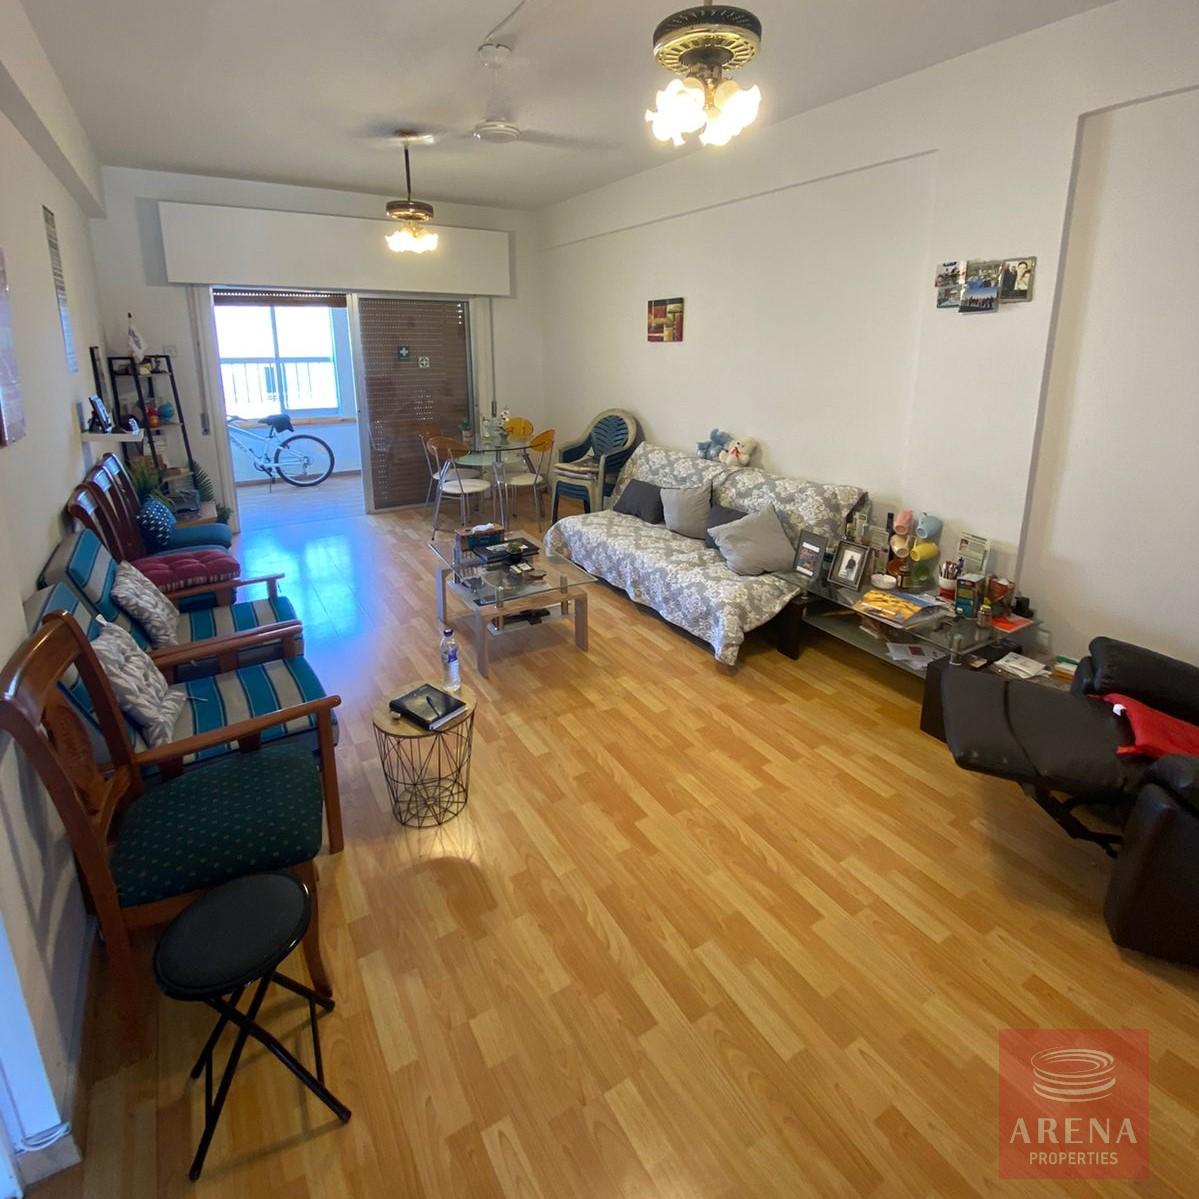 flat in chrysopolitissa - living area